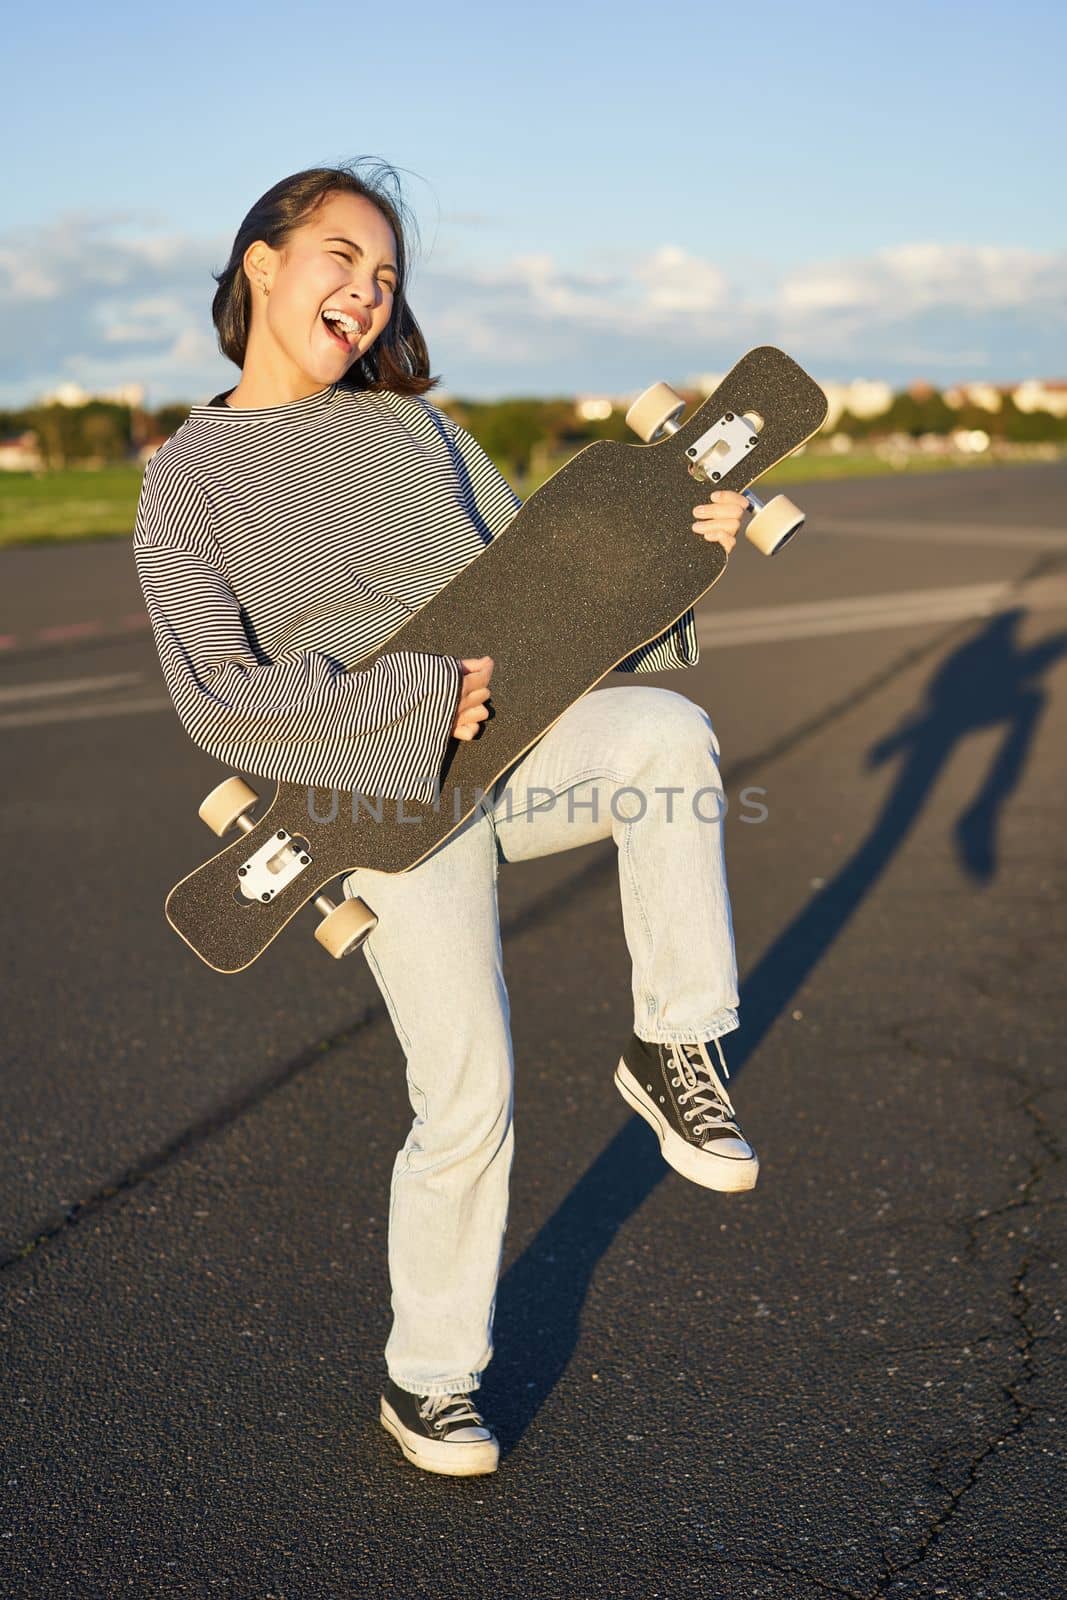 Funny asian girl enjoying skating, holding skateboard like guitar and shadow playing, having fun outdoors.